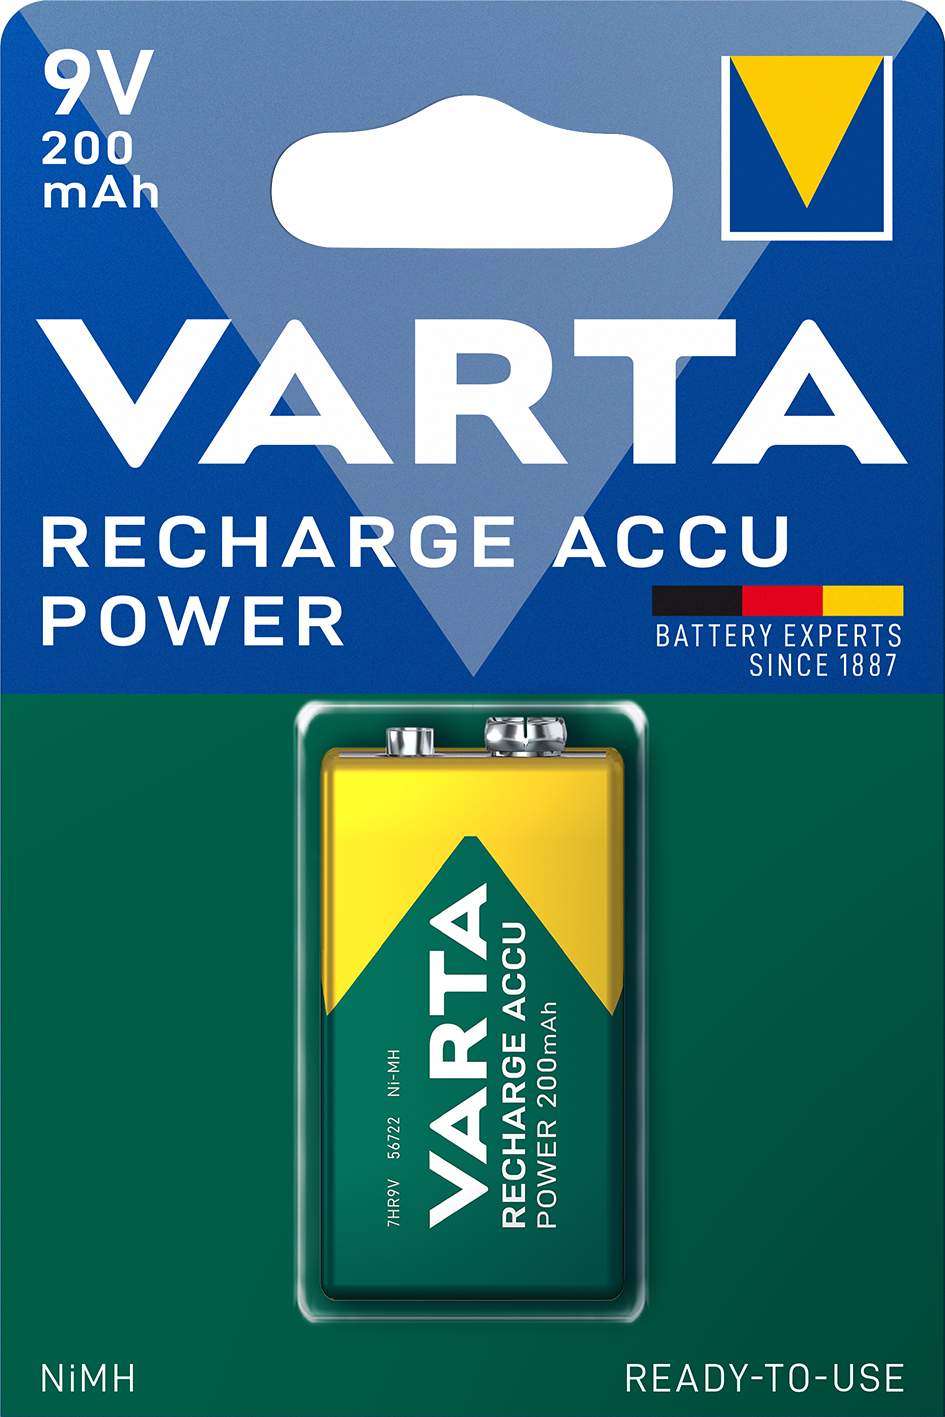 VARTA RECHARGE ACCU POWER 9V 200MAH PAR 1